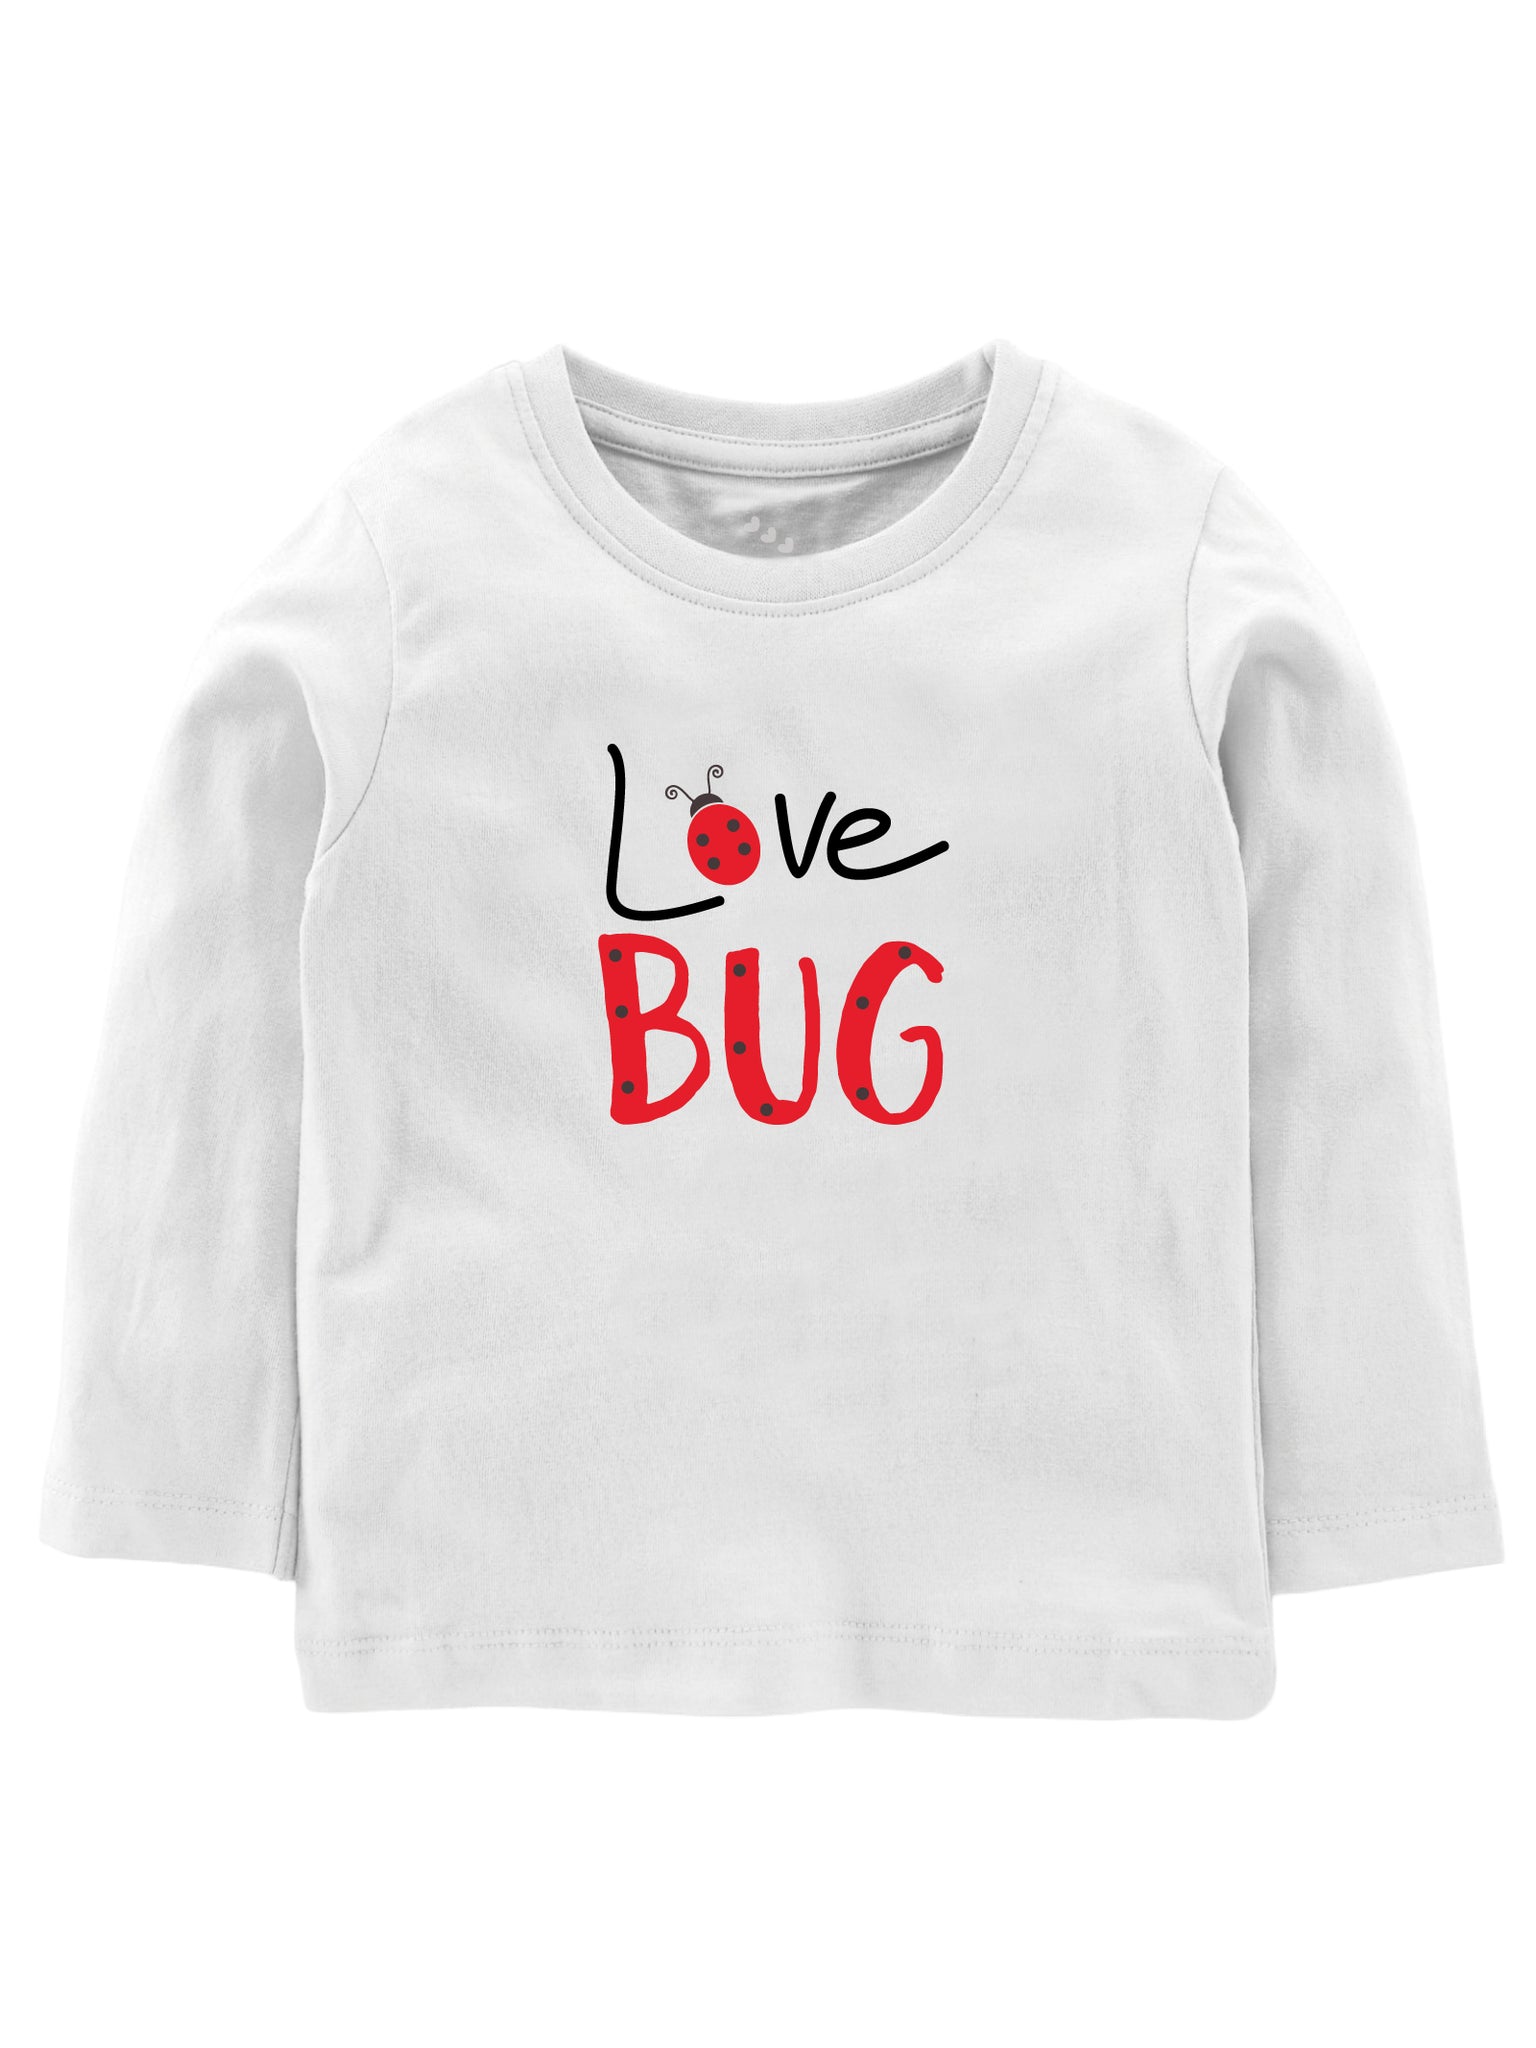 Love Bug - Tee